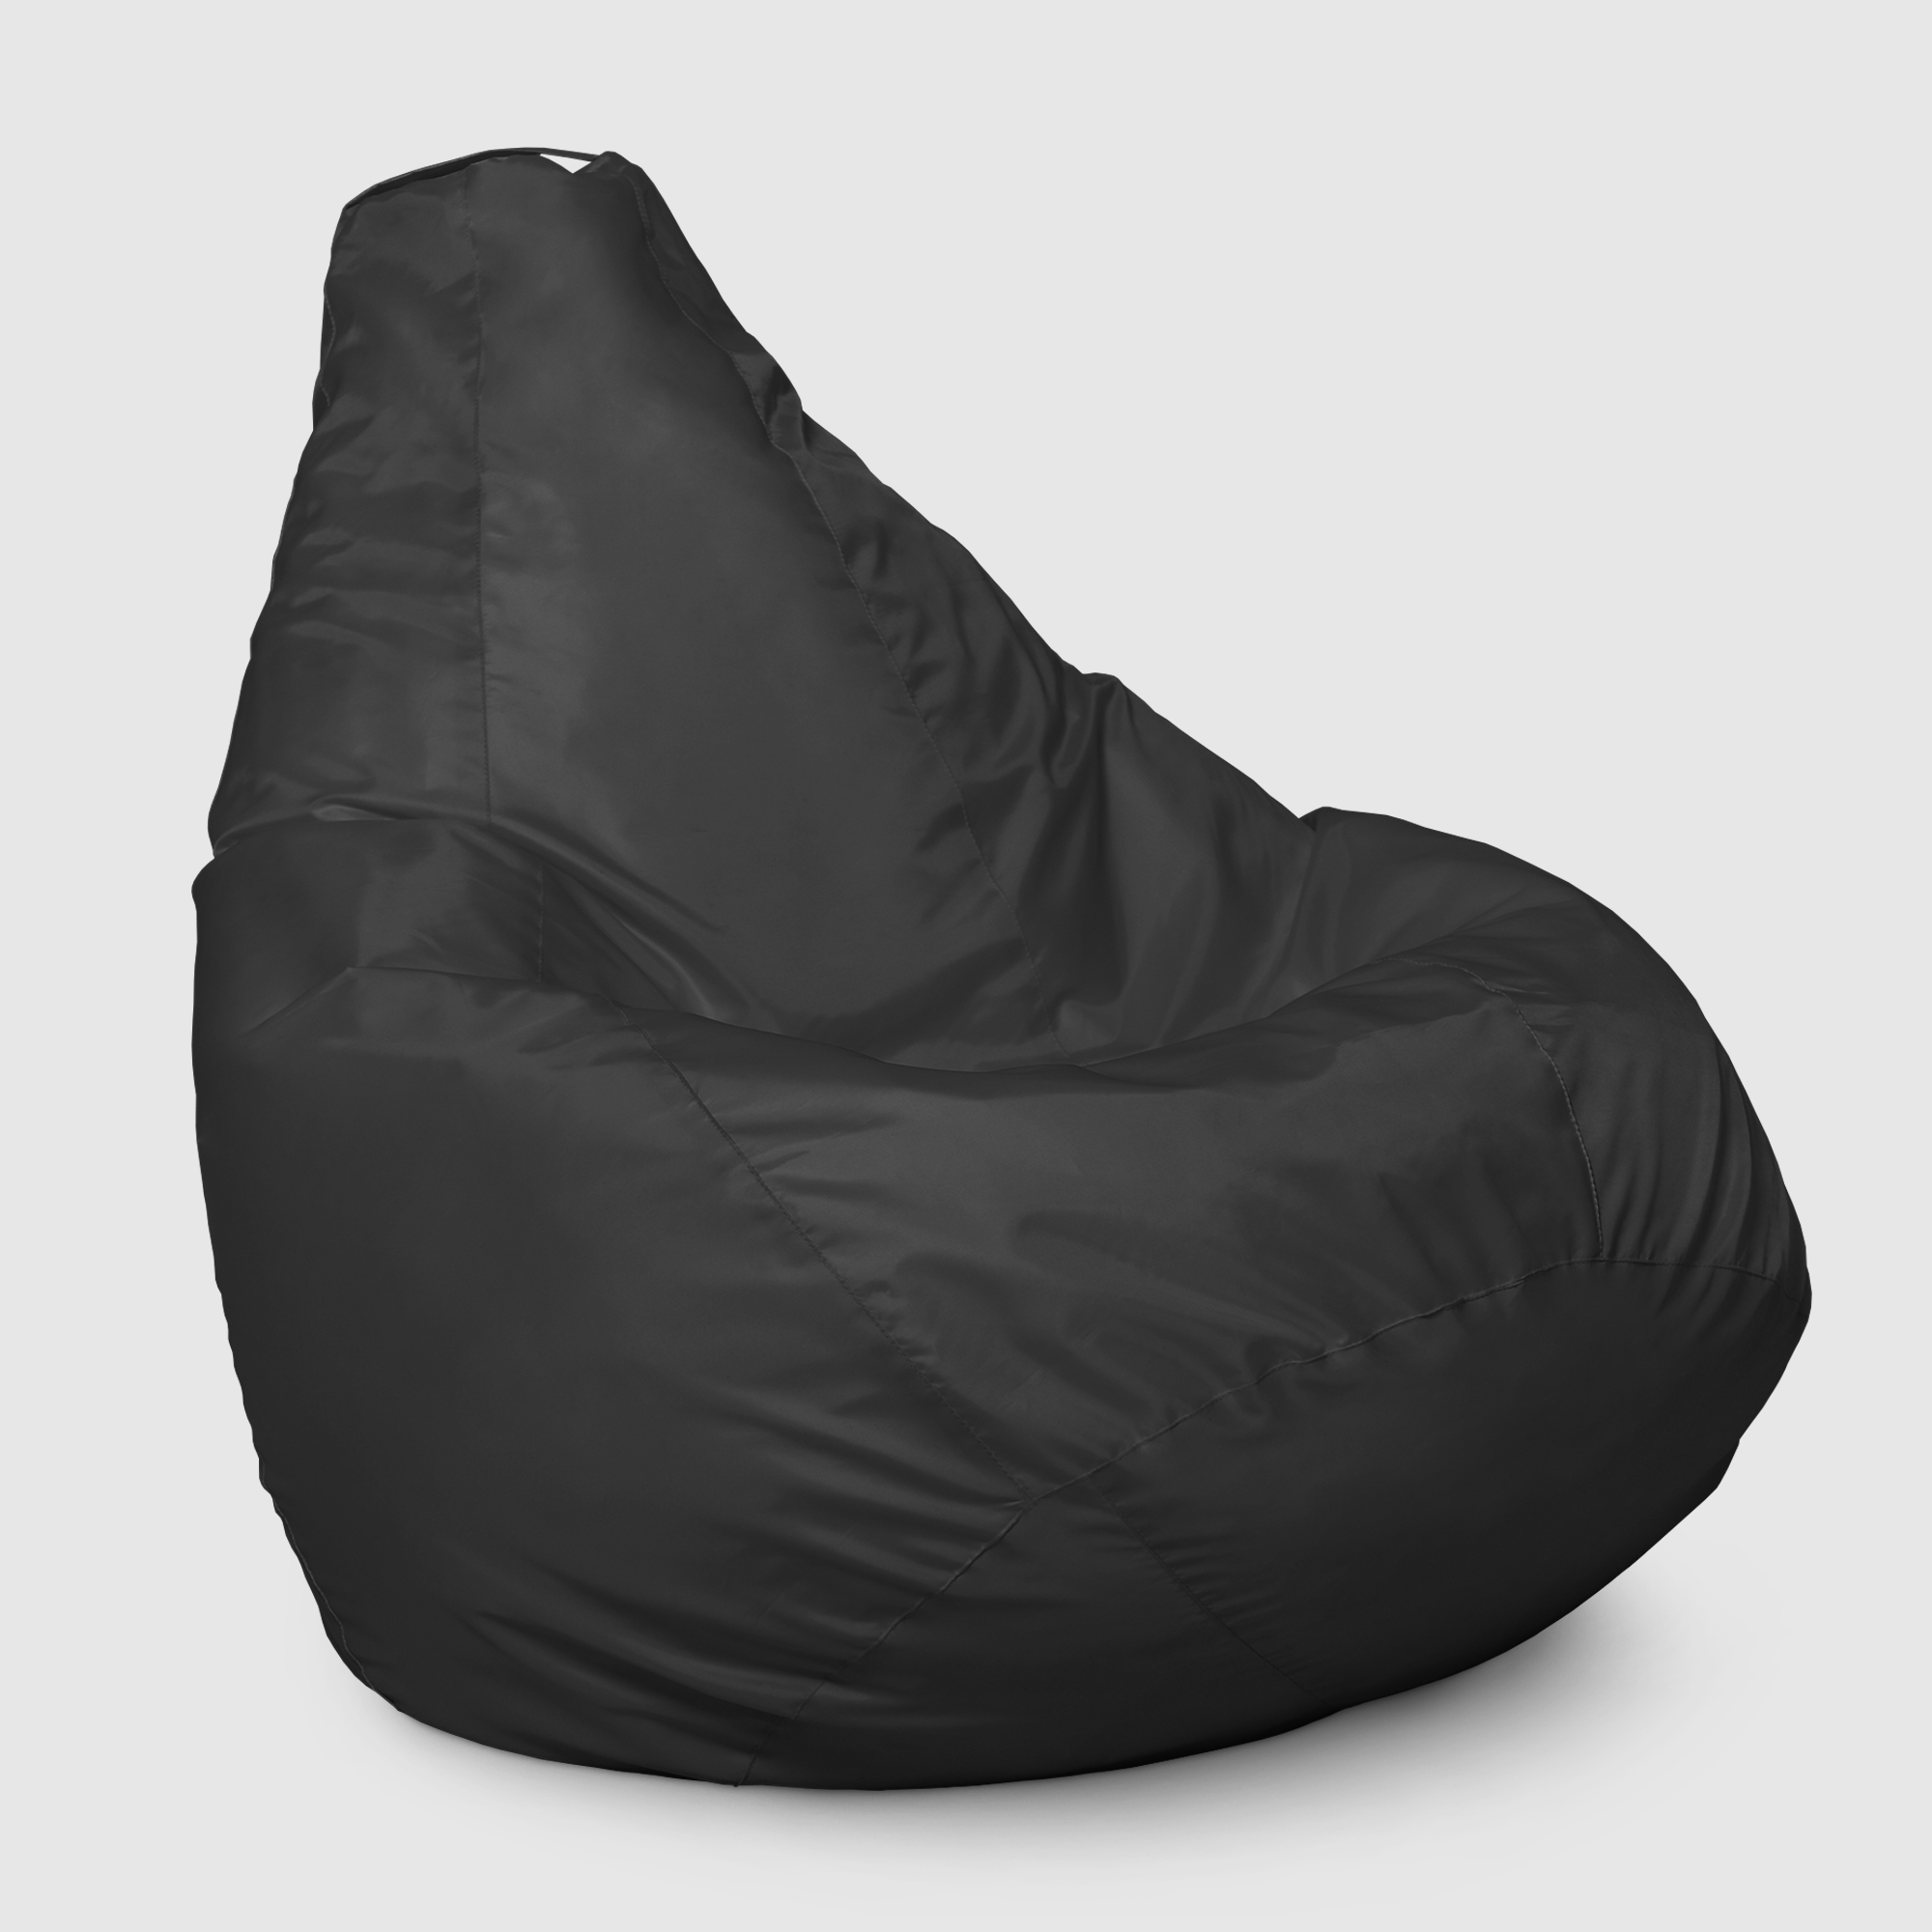 Кресло мешок Dreambag Меган xl черное 85х85х125 см кресло мешок dreambag меган xl зеленое 85х85х125см